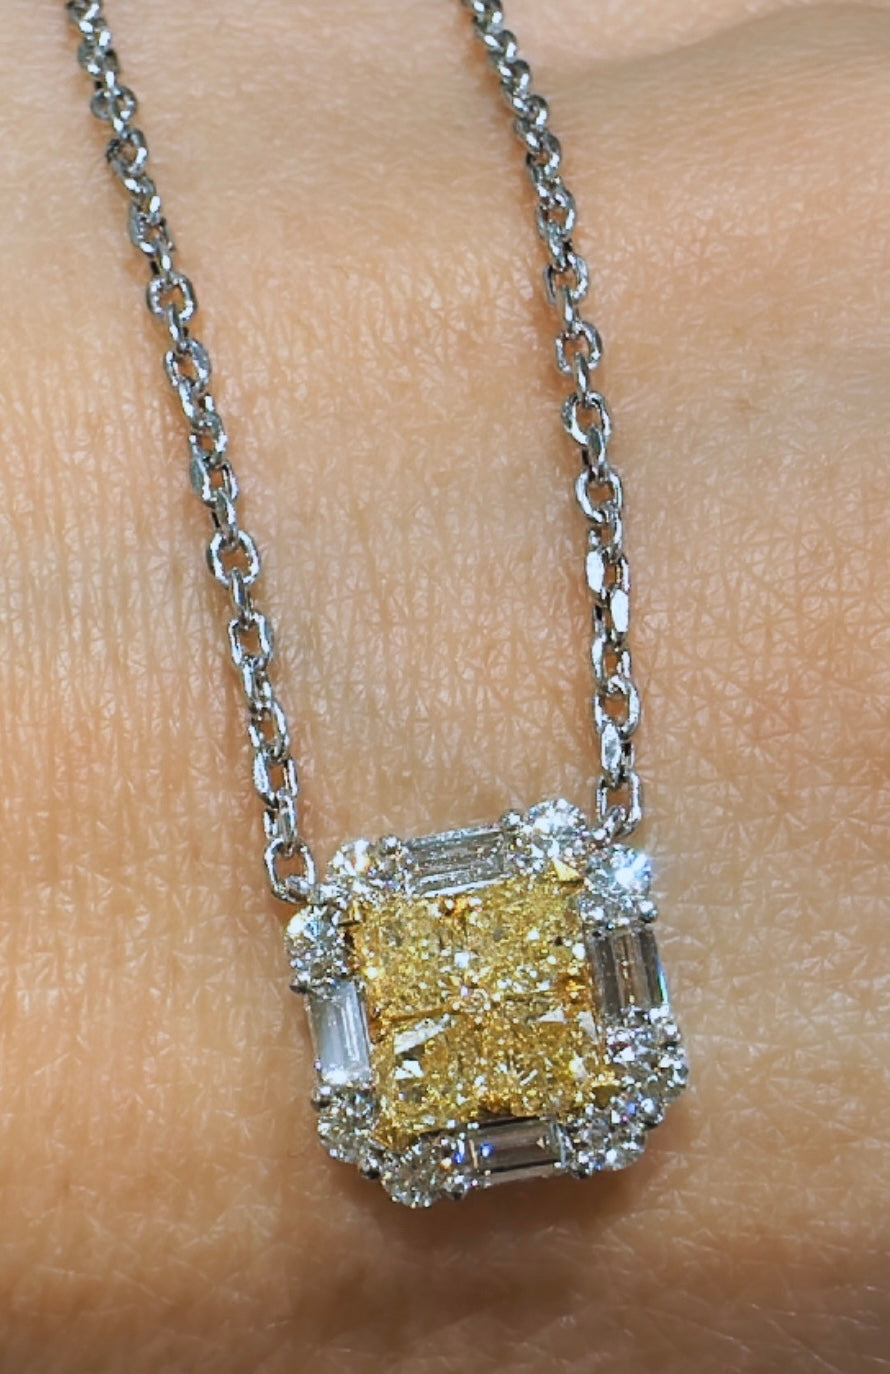 1.61ct tw Canary Fancy Yellow Diamond Pendant Necklace